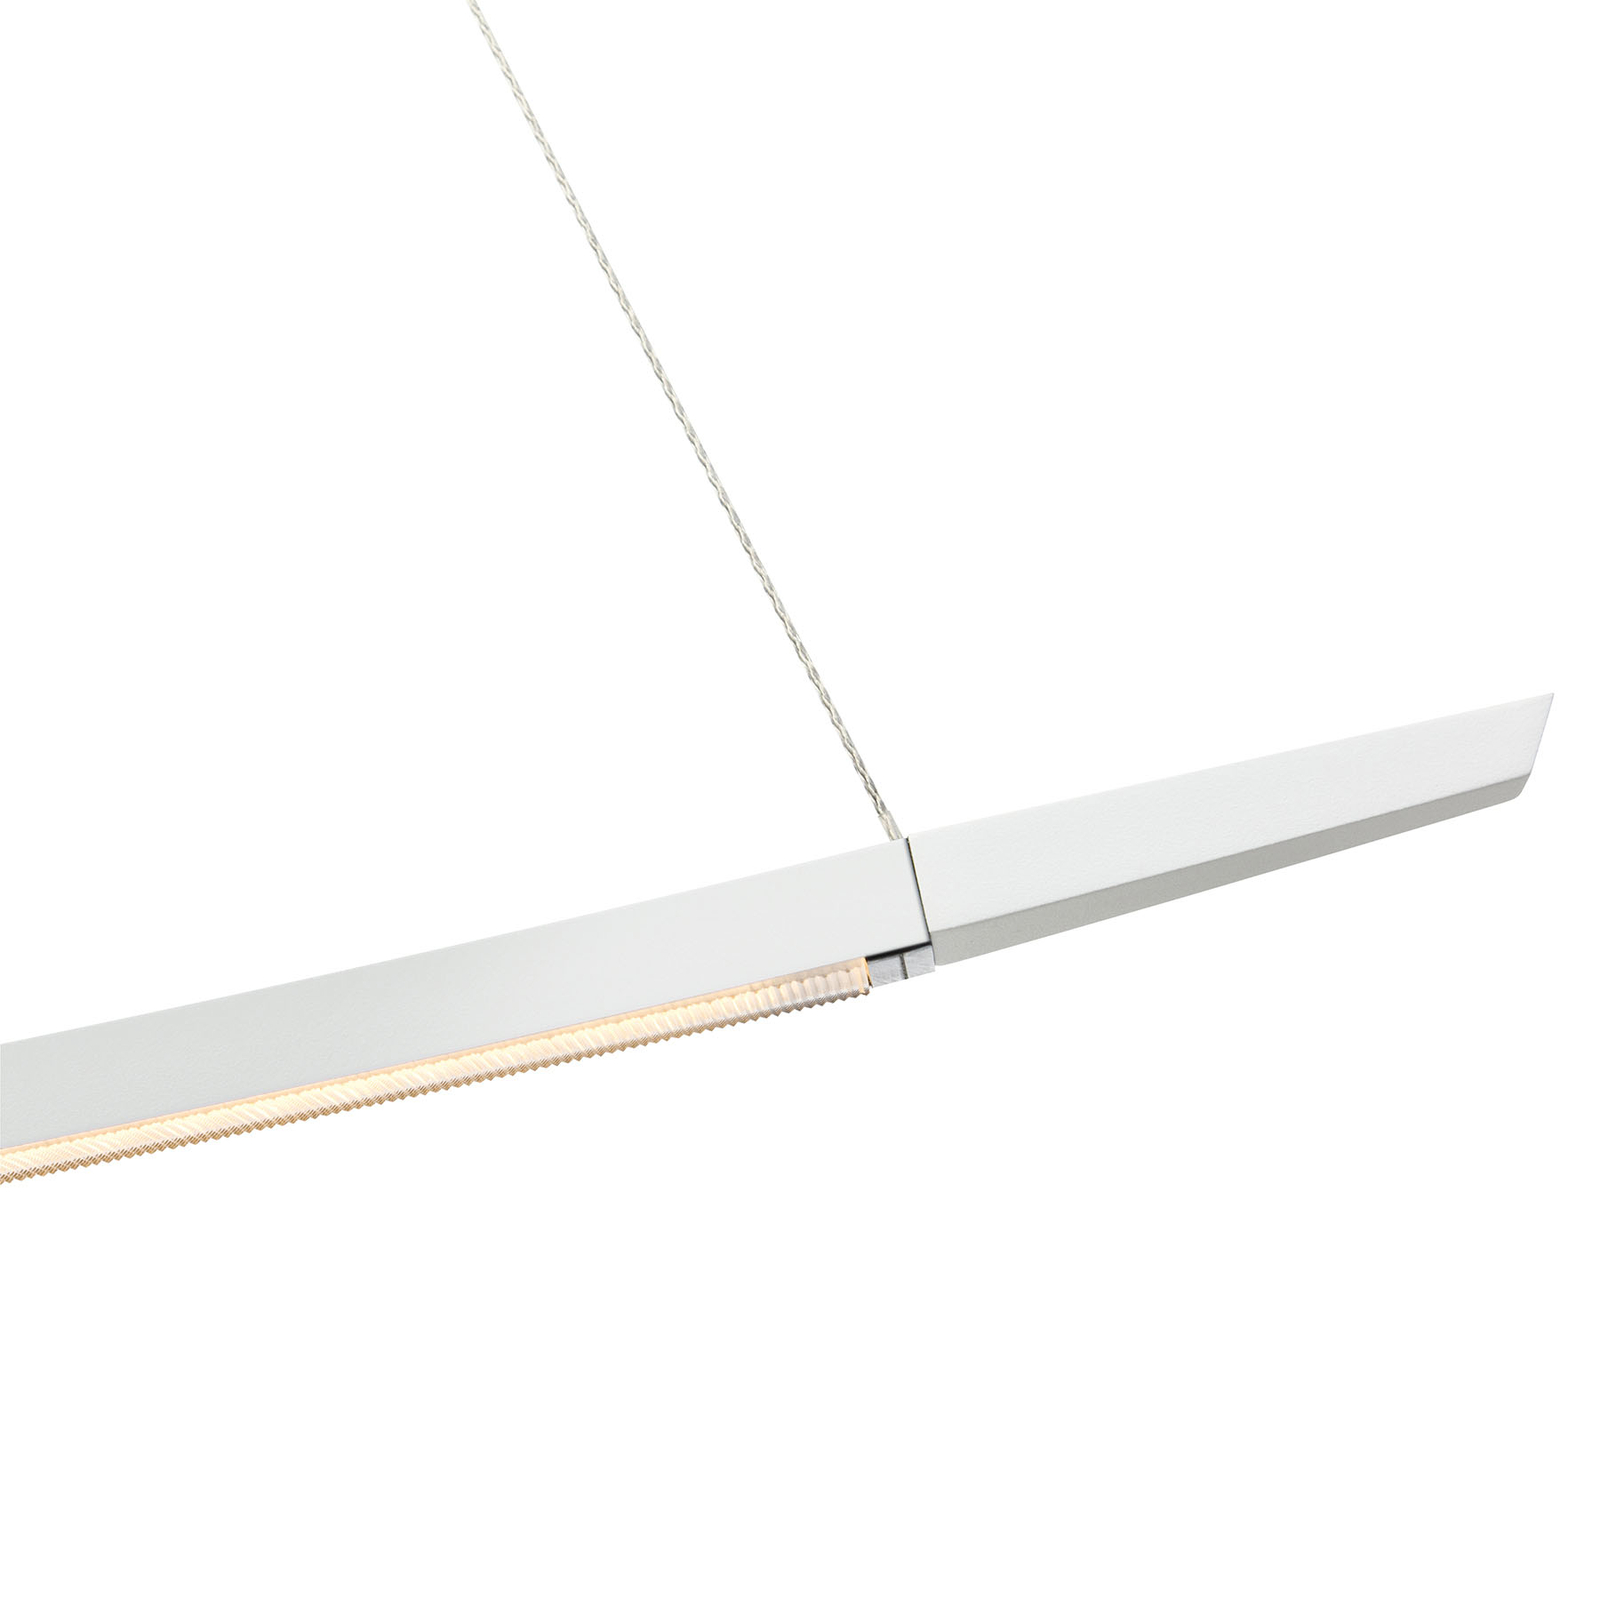 OLIGO Lisgo LED závěsné světlo, bílá matná